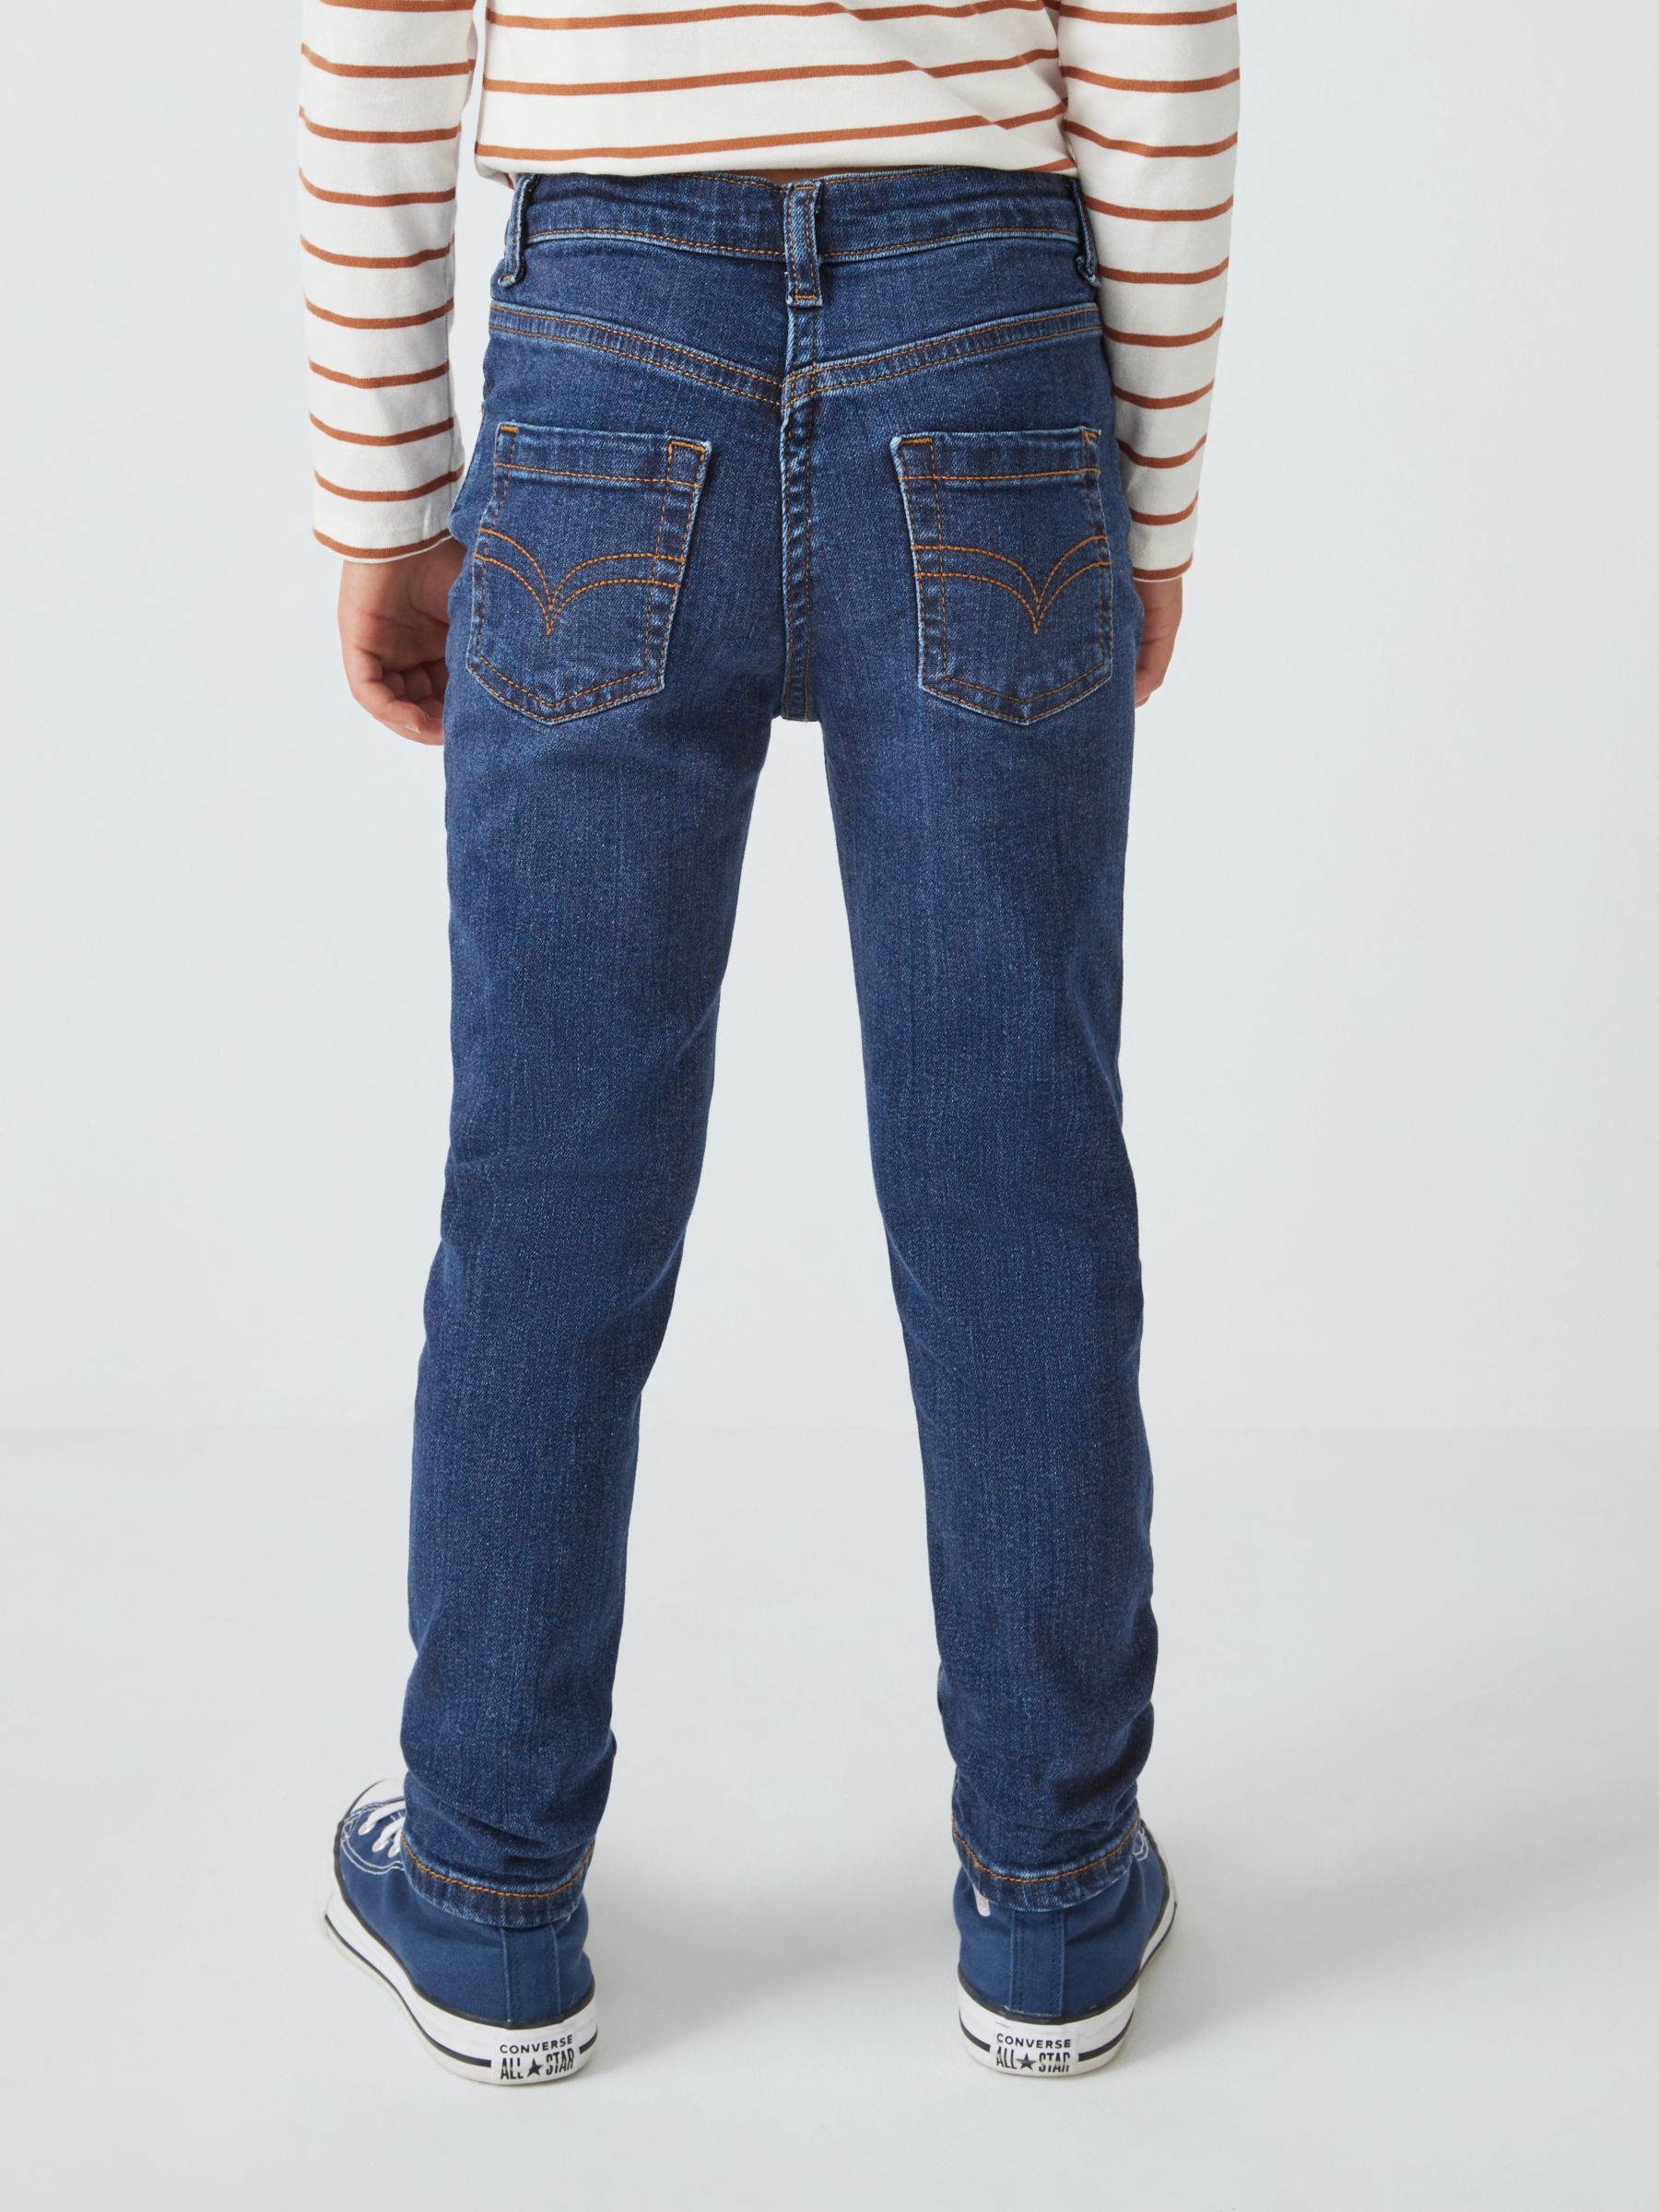 John Lewis Girl's Skinny Jeans, Mid Wash Denim, 3 years